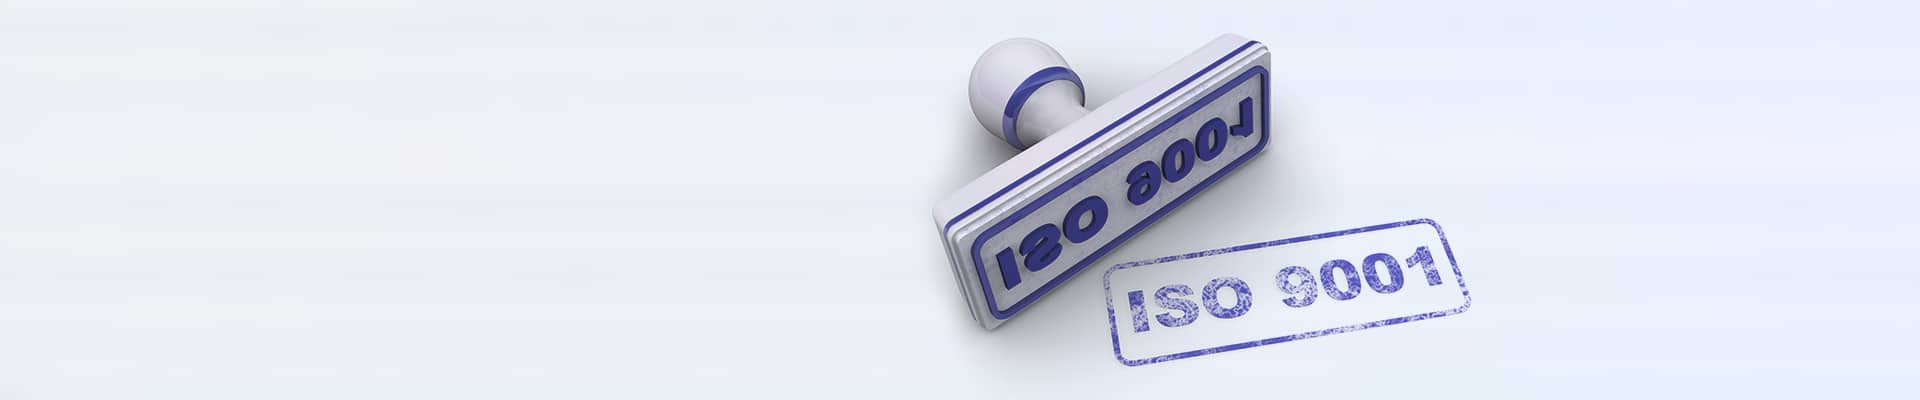 ISO9001 Stamp Case Study